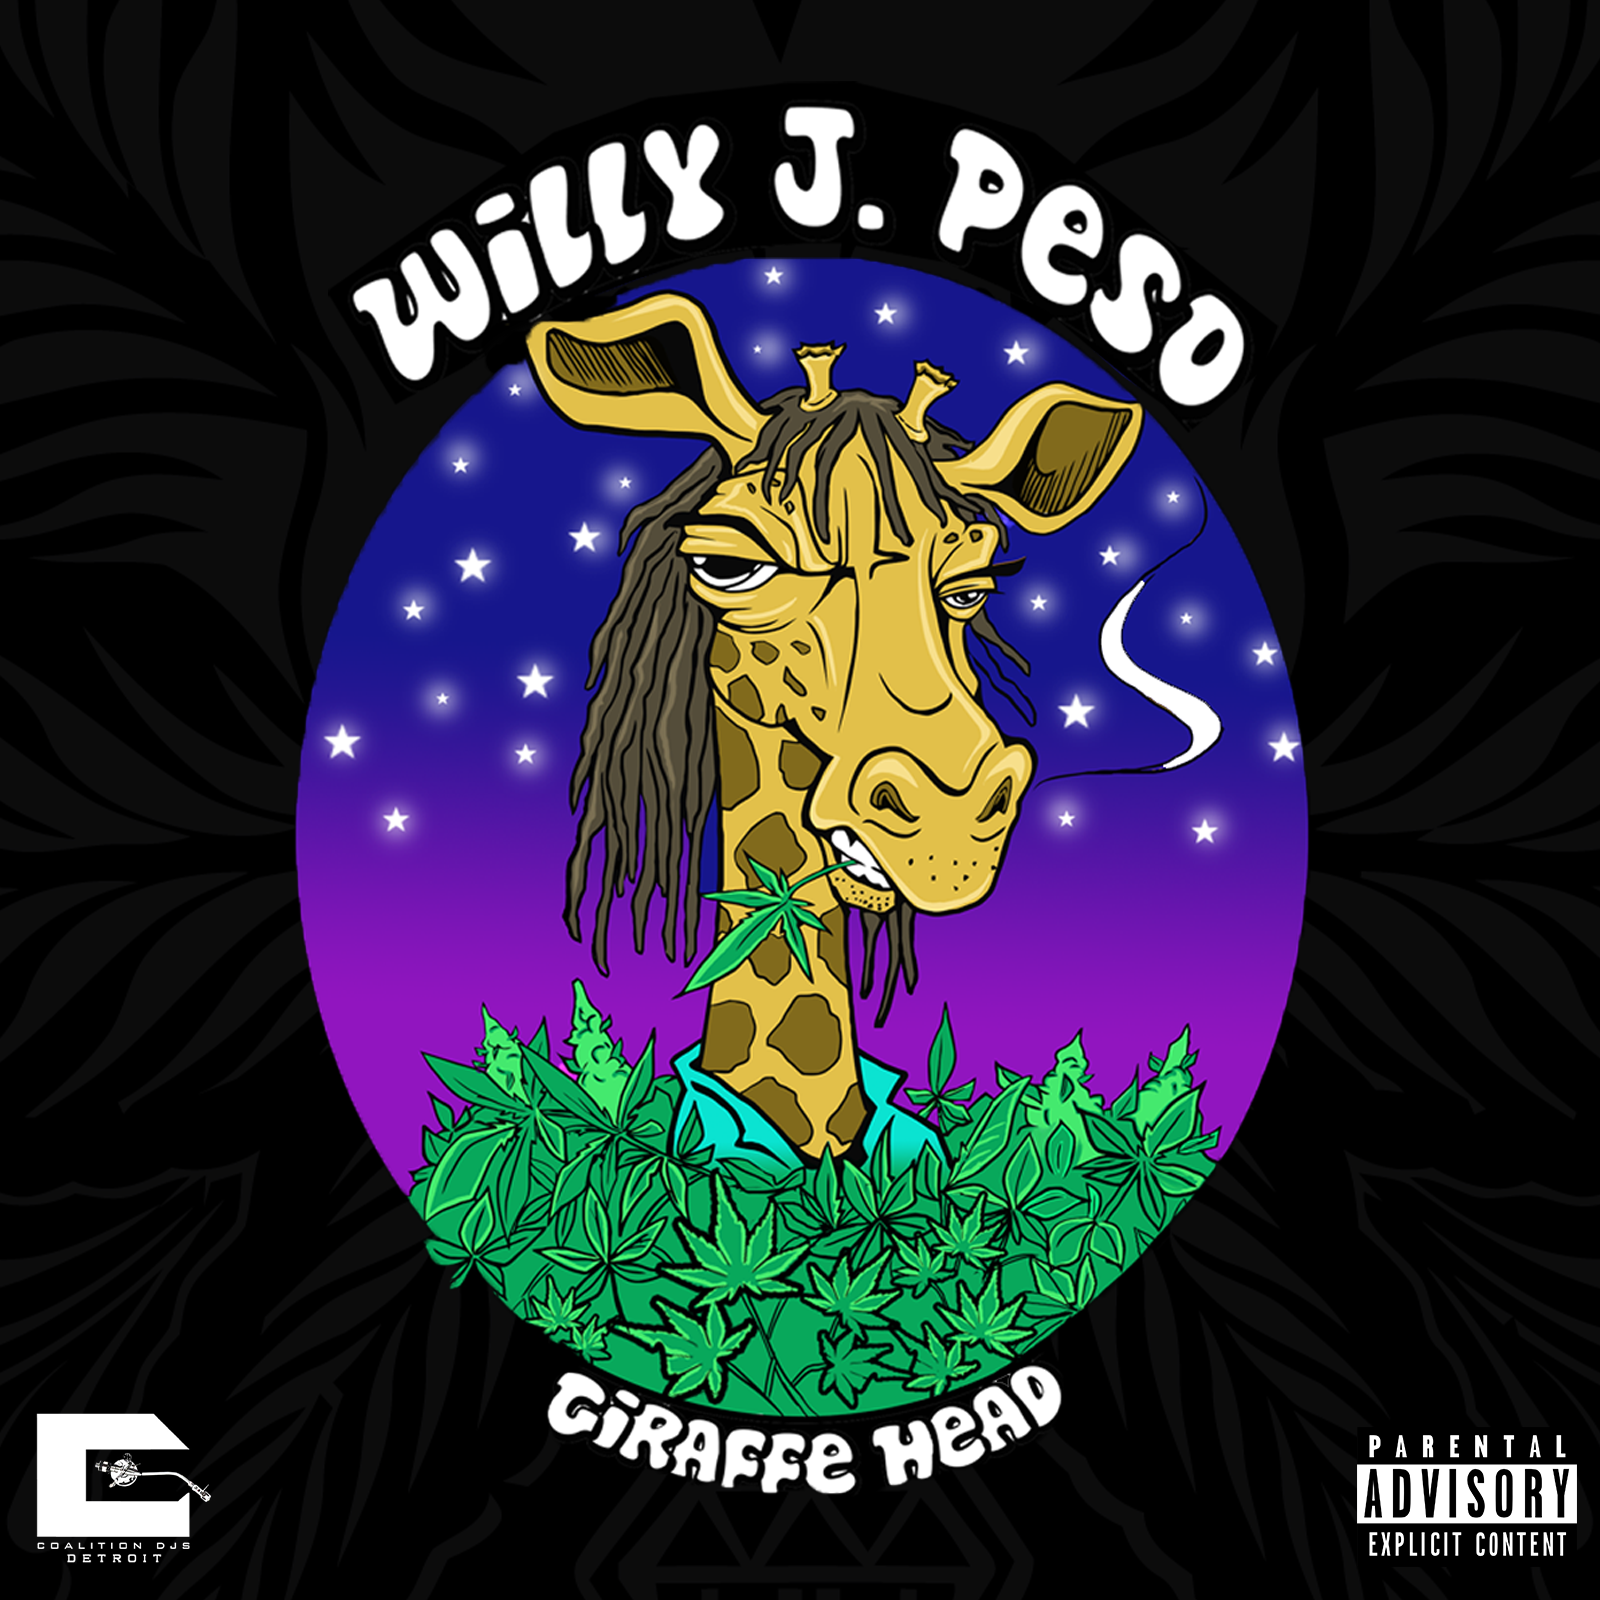 Willy J Peso - Giraffe Head Cover Art